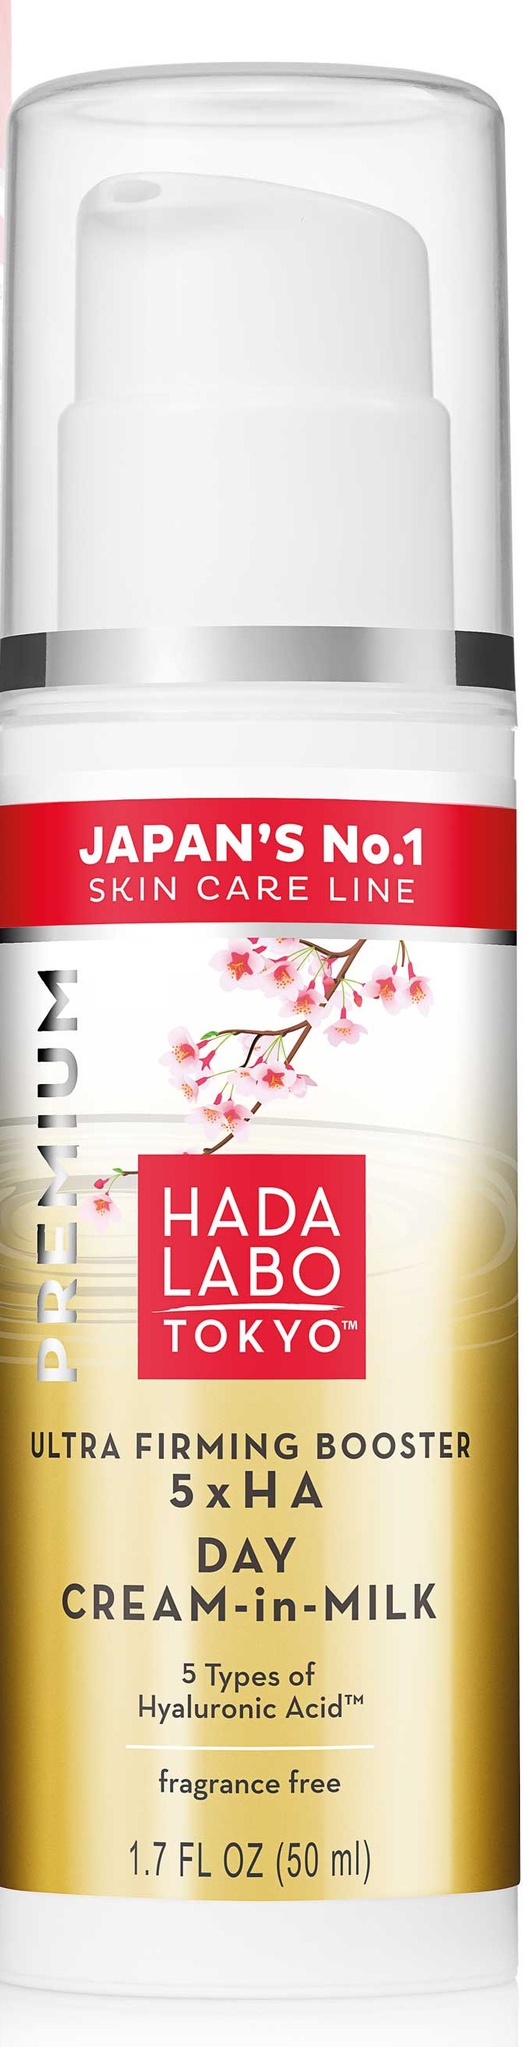 Hada Labo Tokyo Ultra Firming Booster 5xHA Day Cream-in-Milk